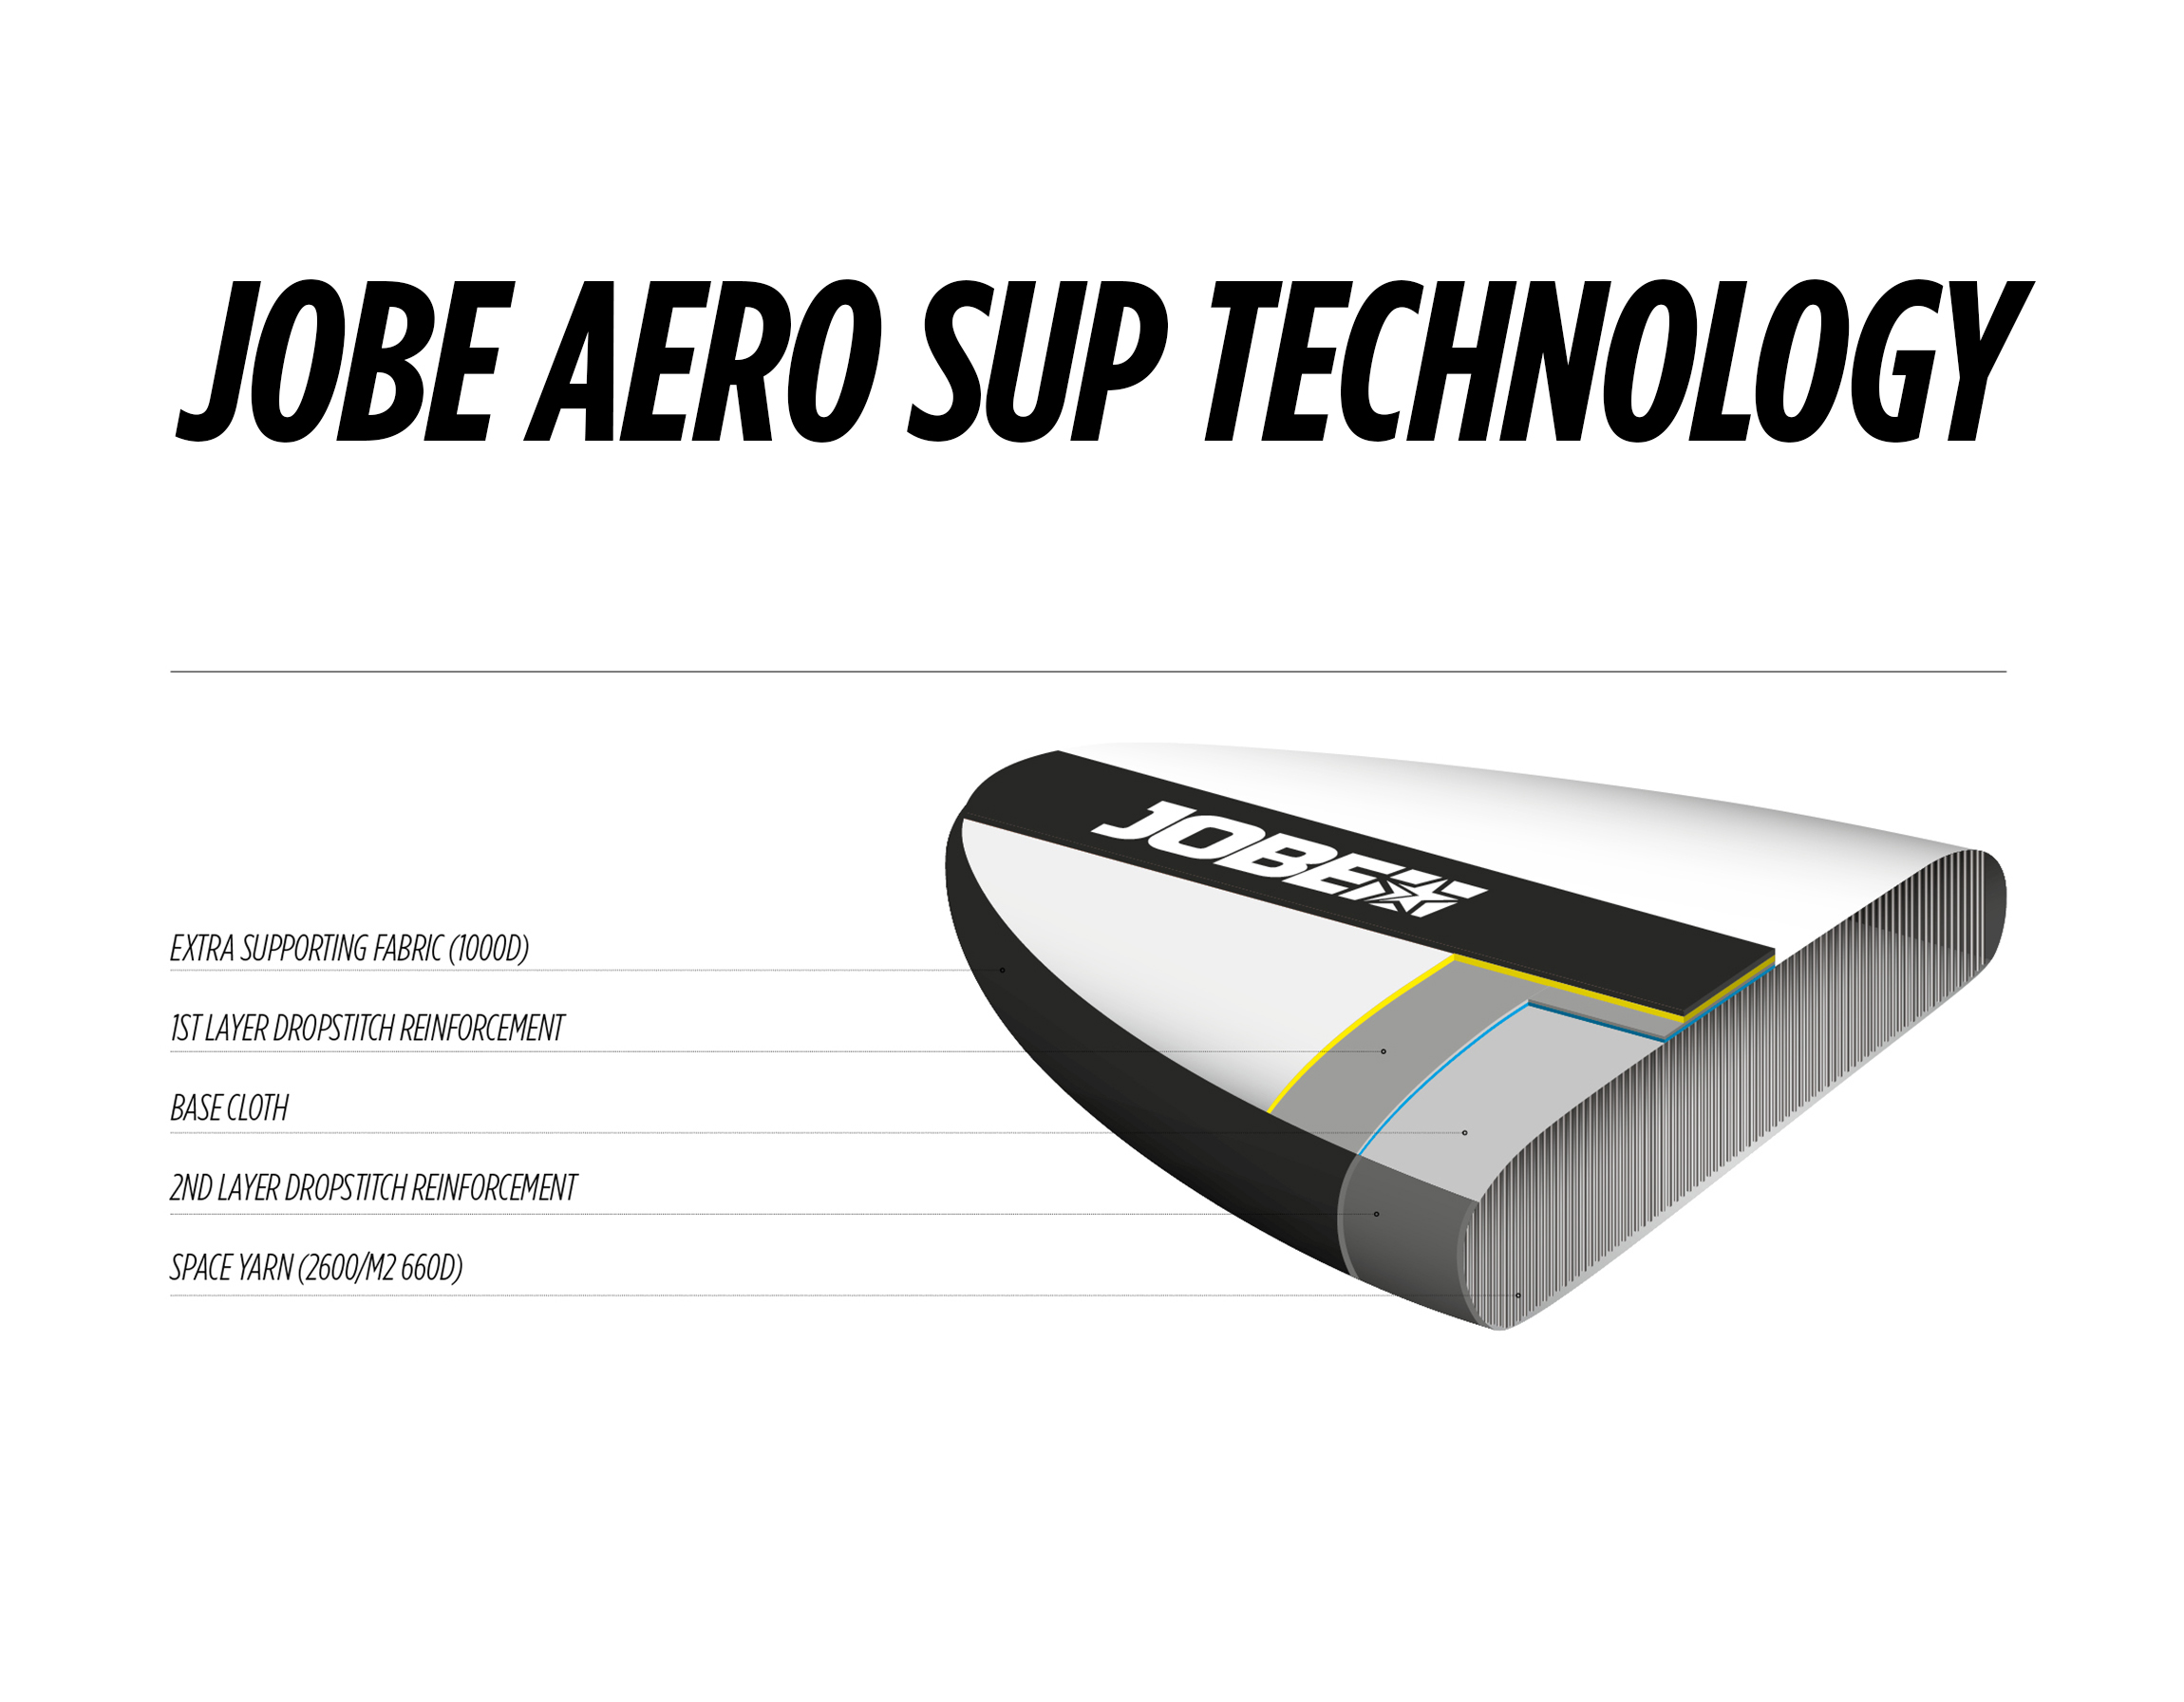 The reason why Jobe Aero SUPs are so lightweight